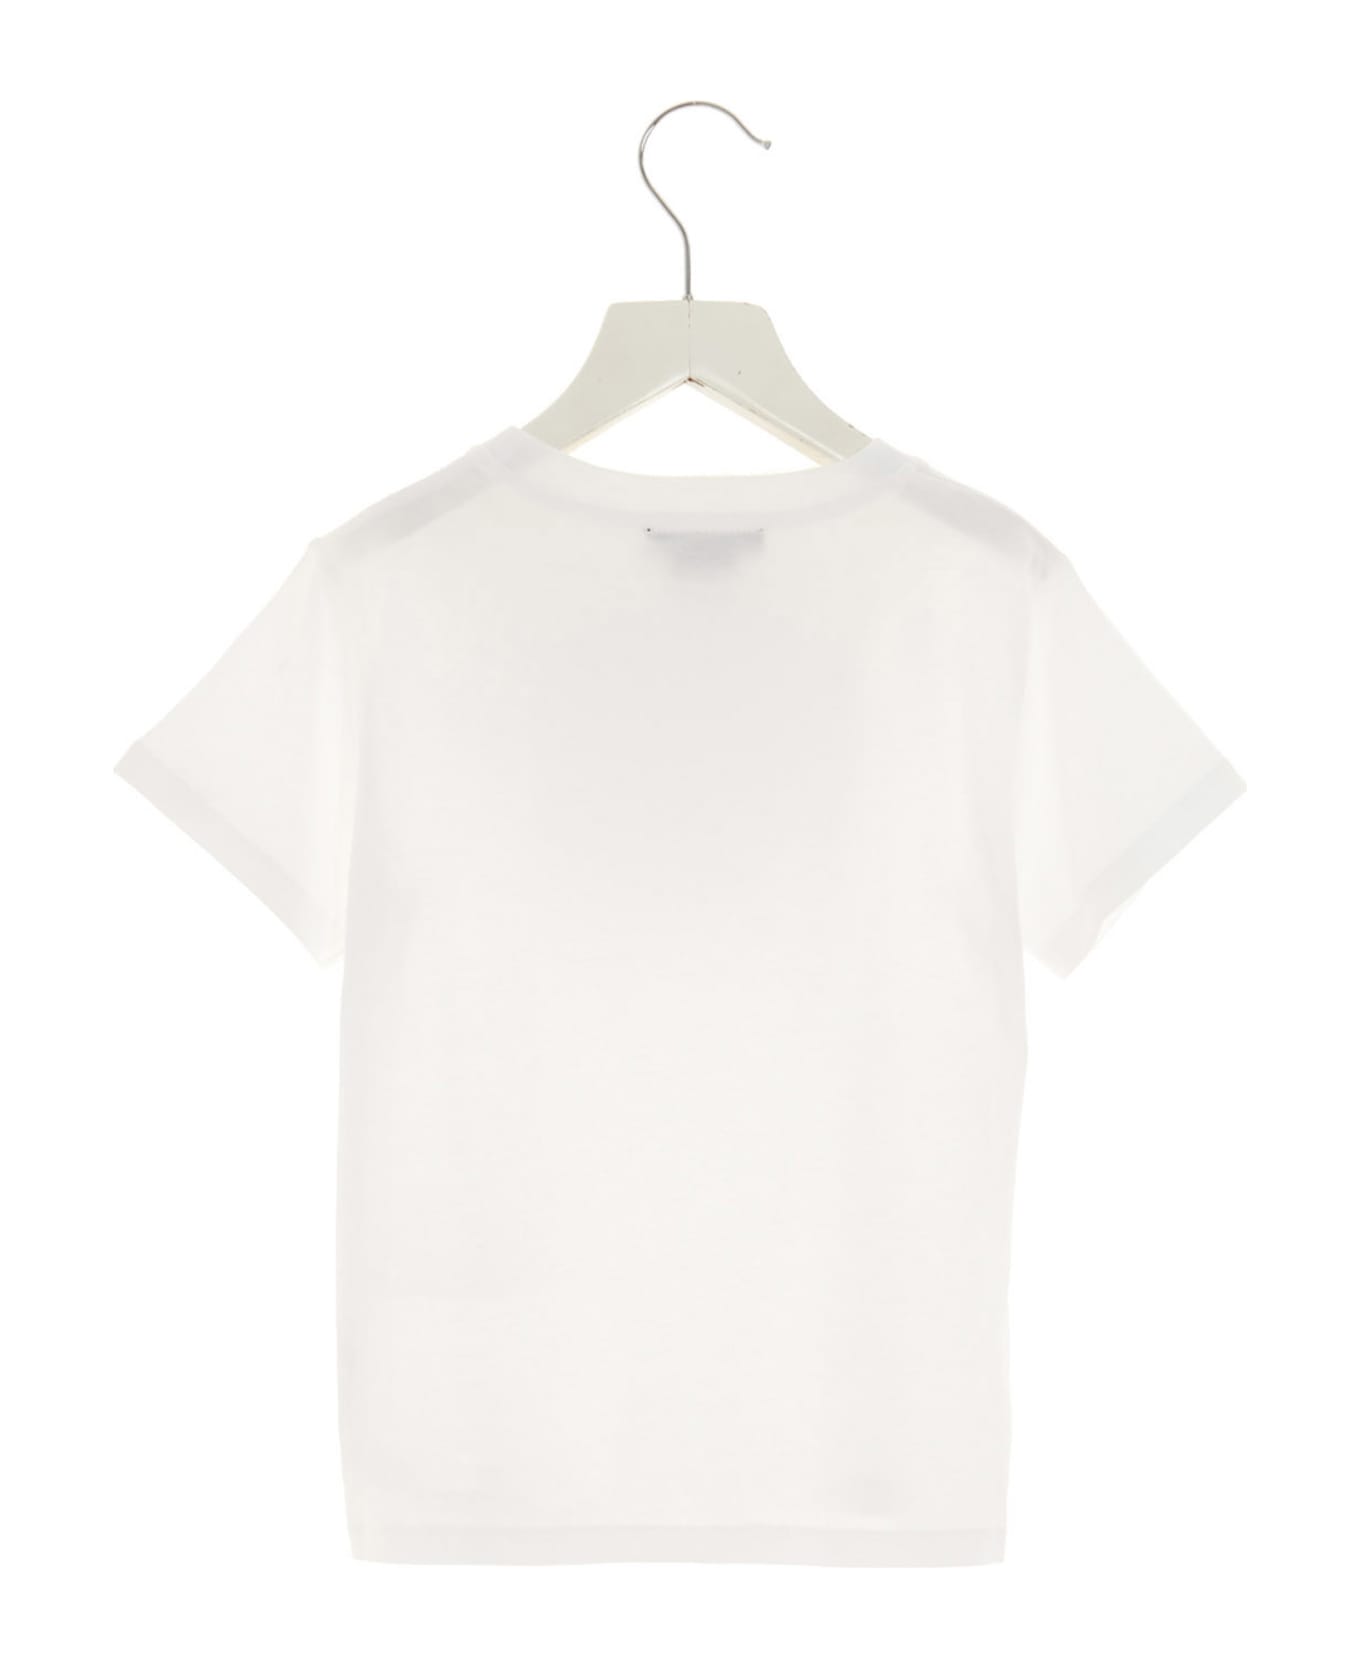 Balmain Logo T-shirt - White